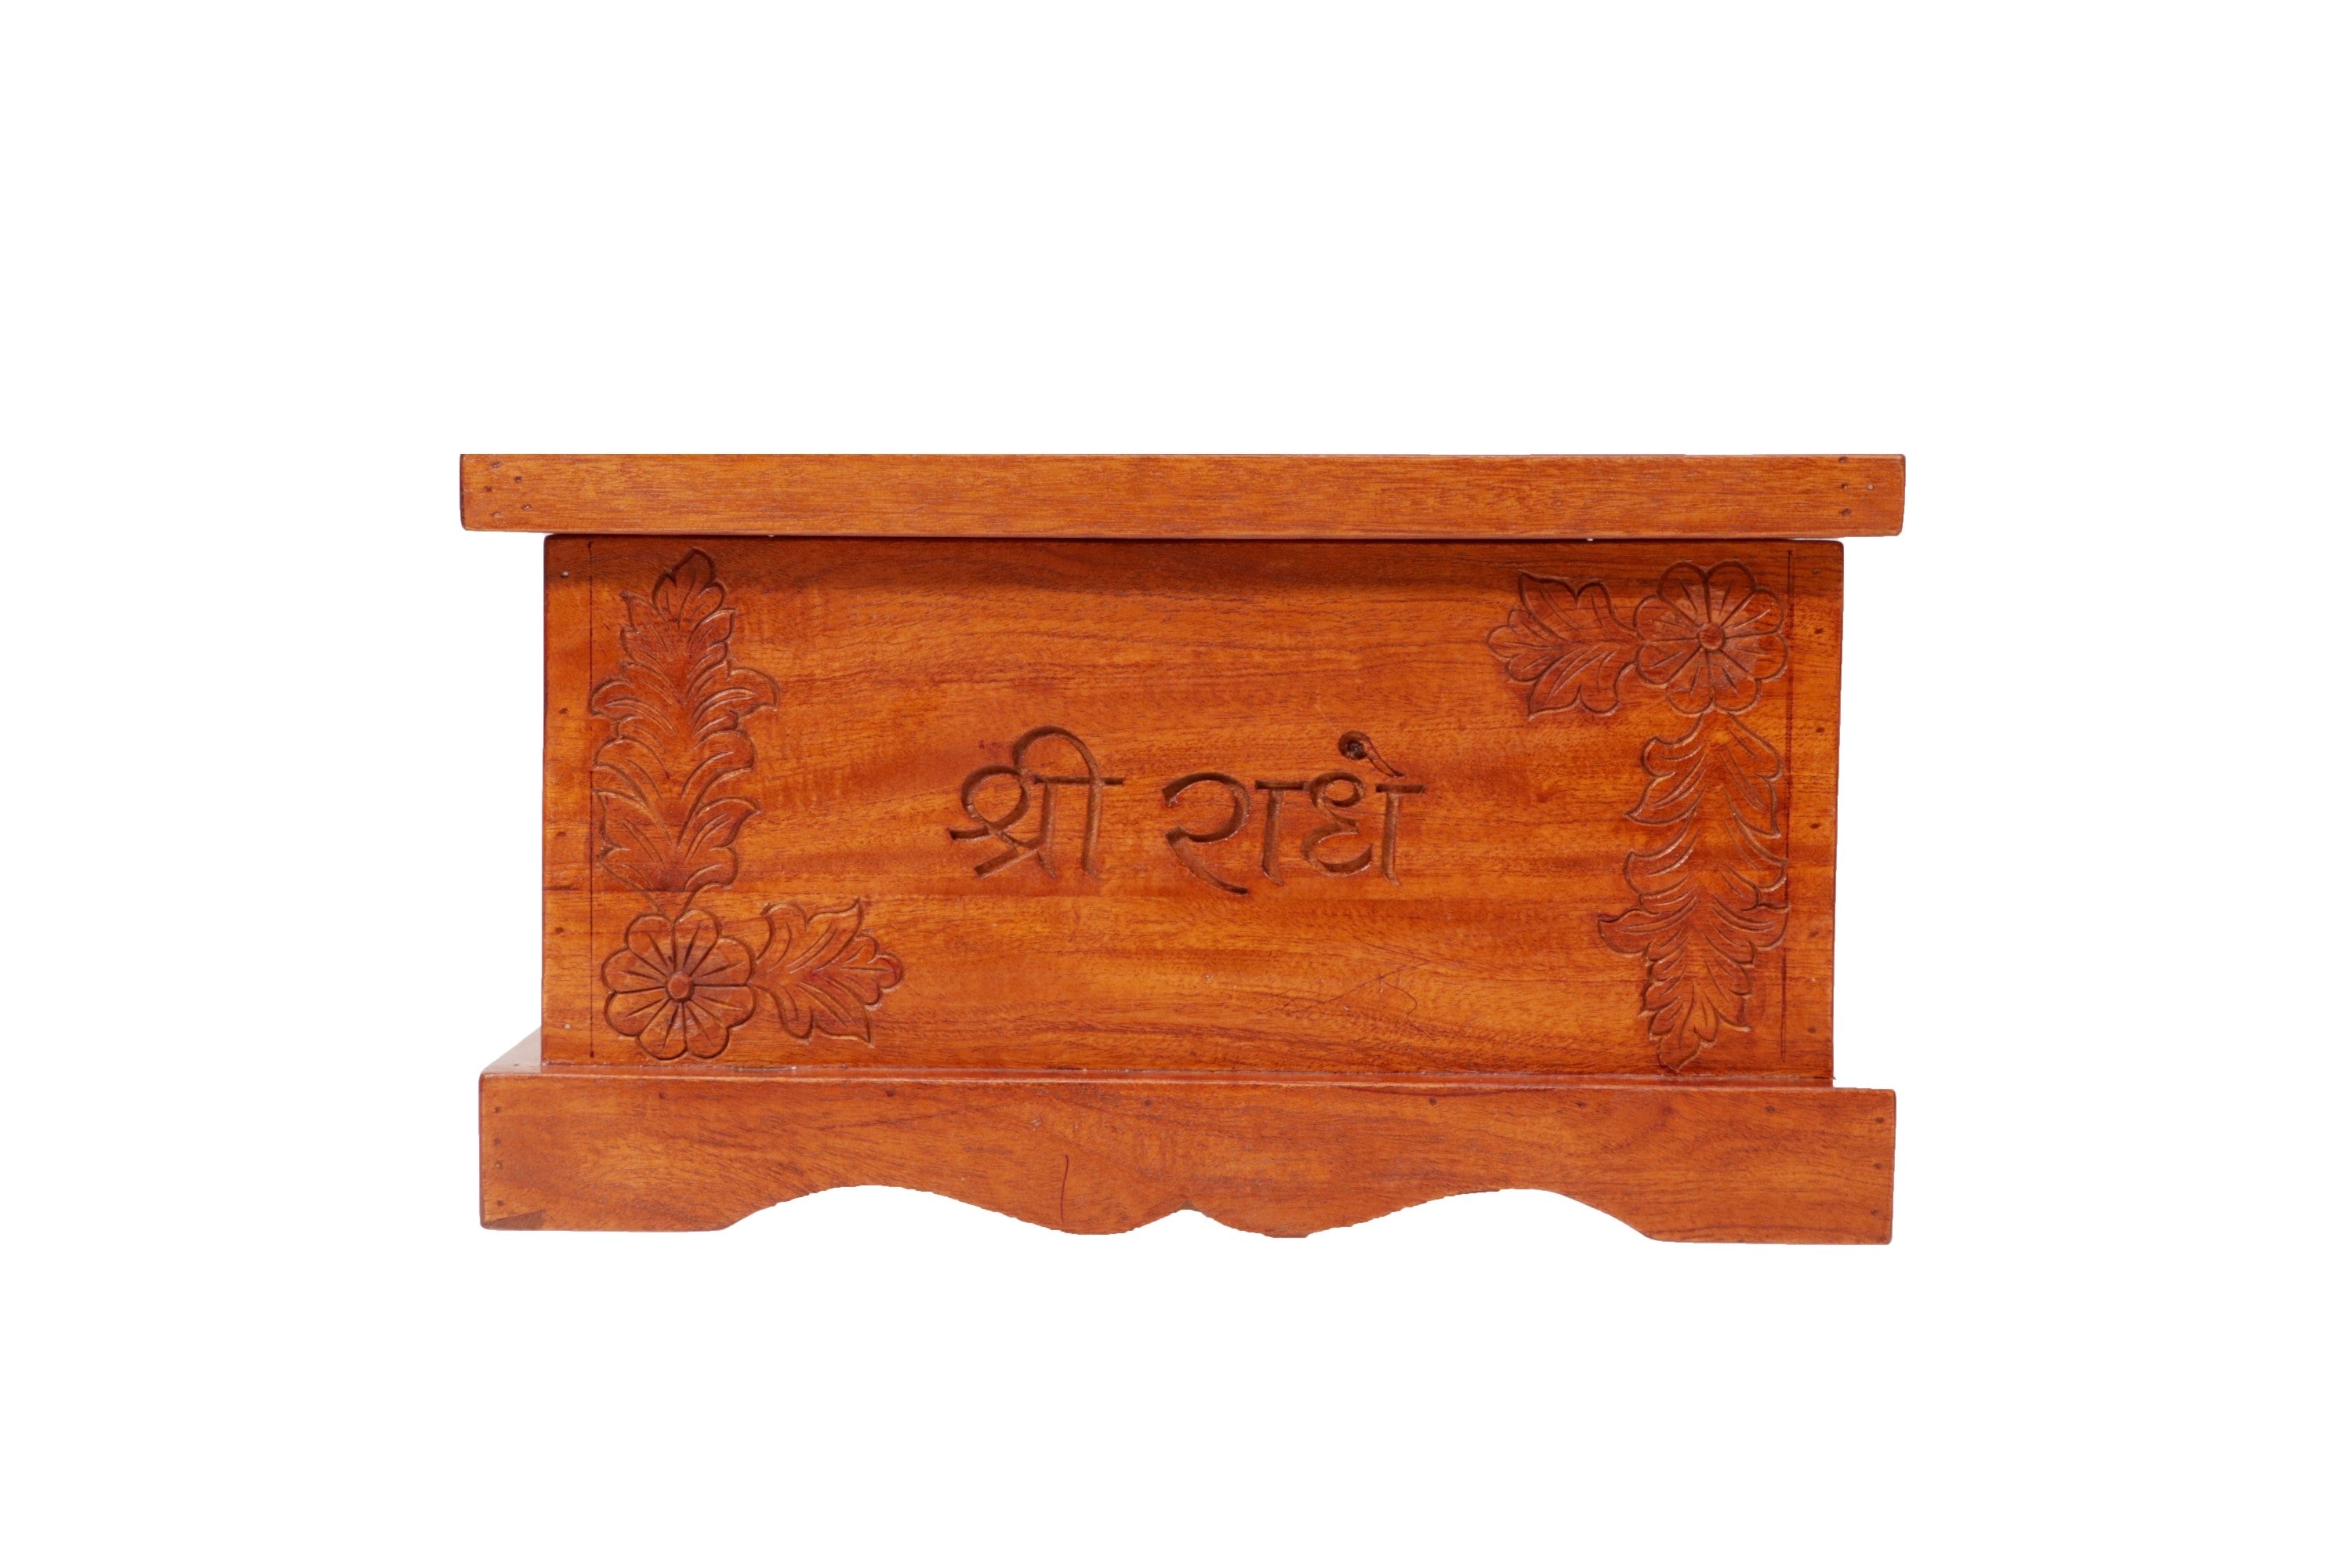 Wooden Religious Book Holder + Storage Sanduk Wooden Box